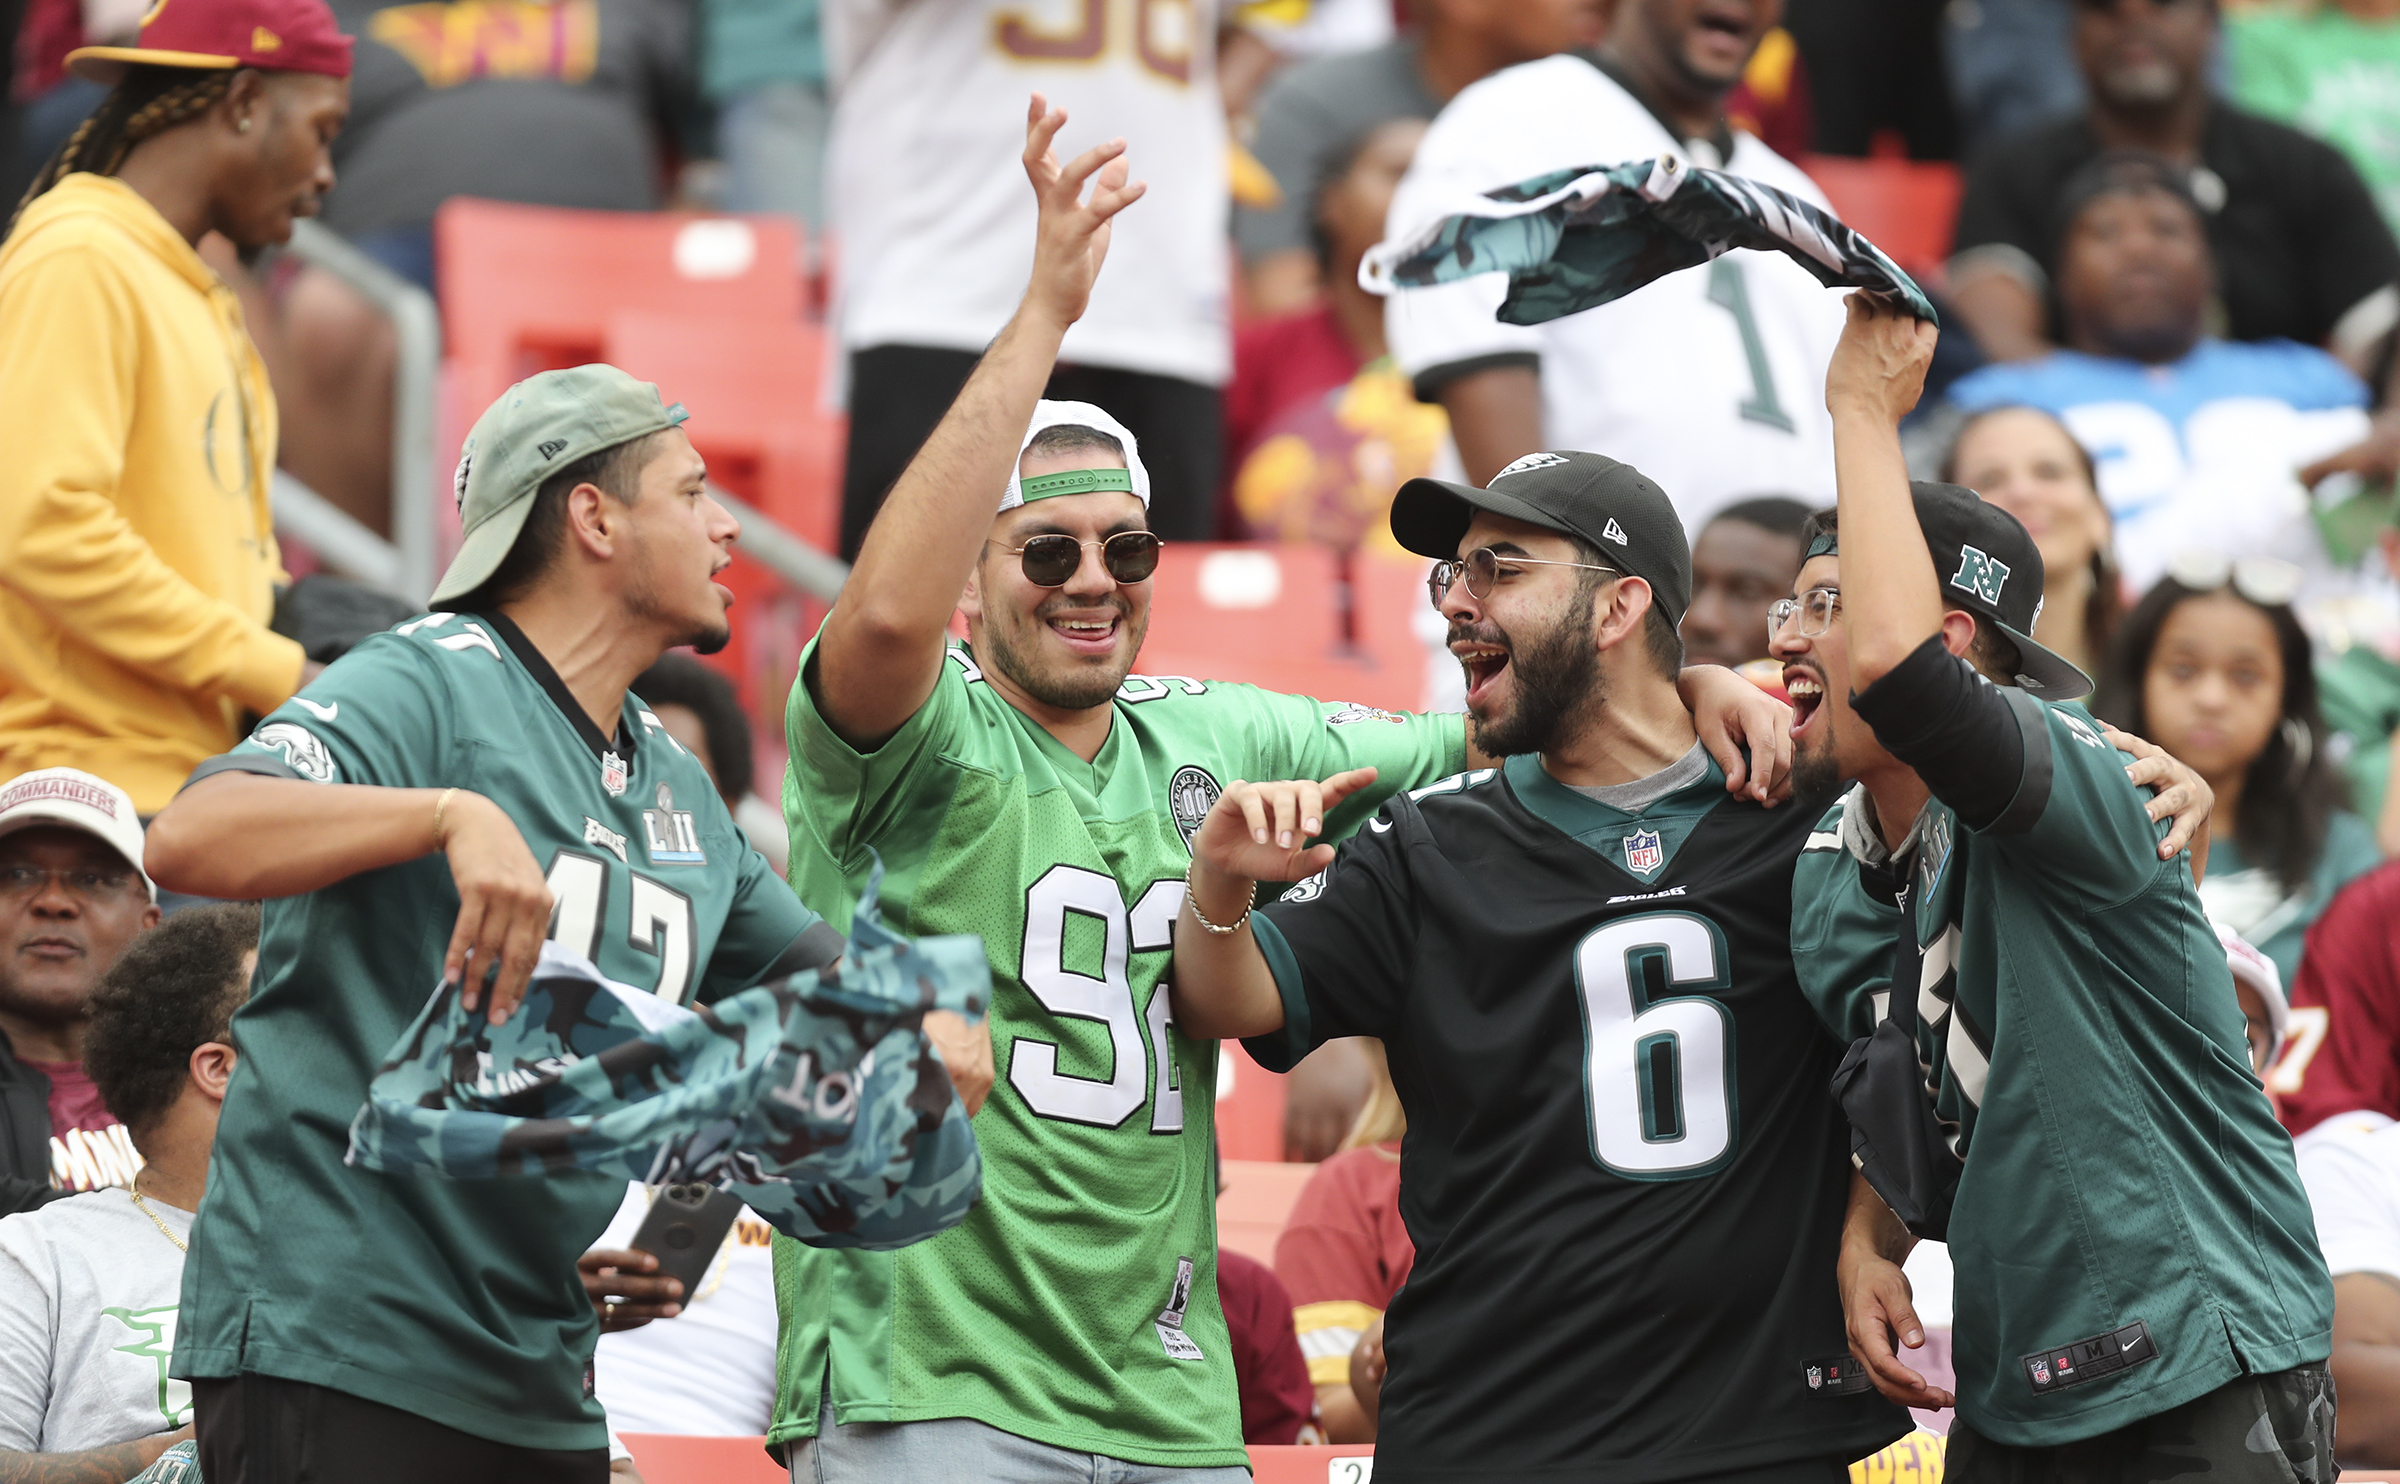 Eagles fans take over Washington's stadium, with many turning 'Wentz'  jerseys into 'Brown